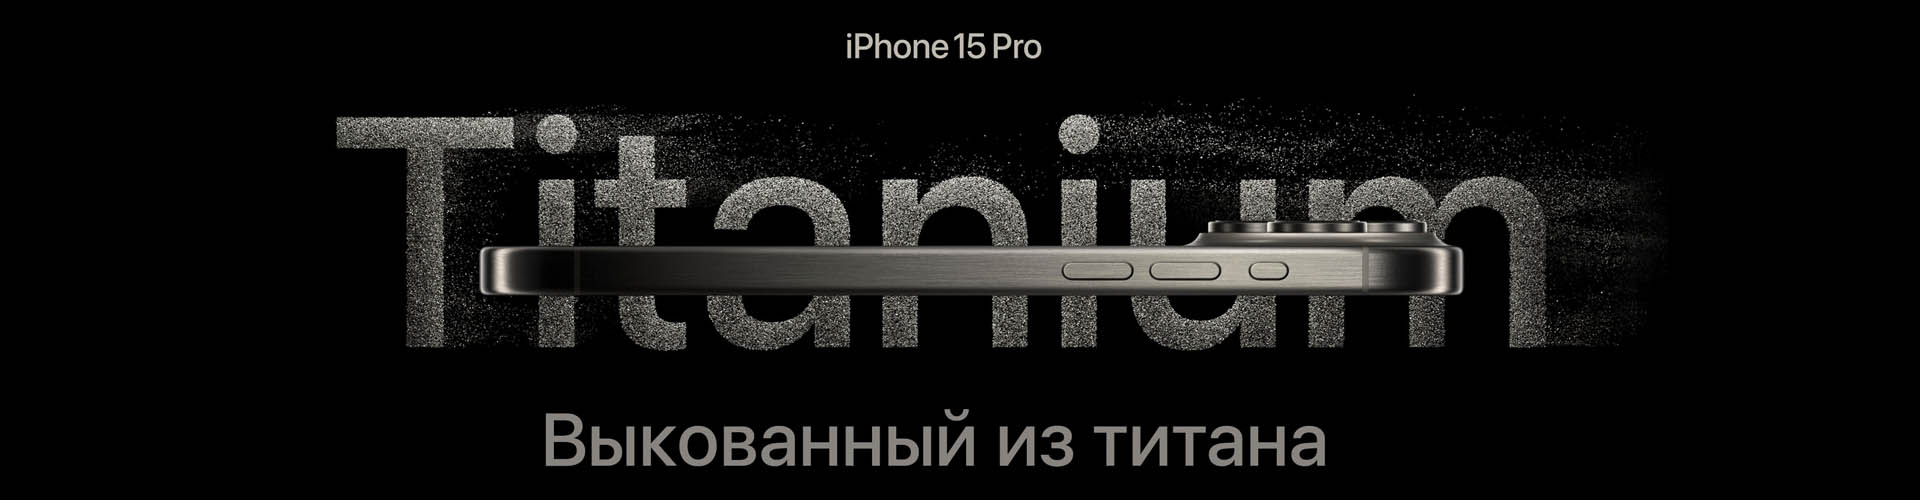 IPhone 15